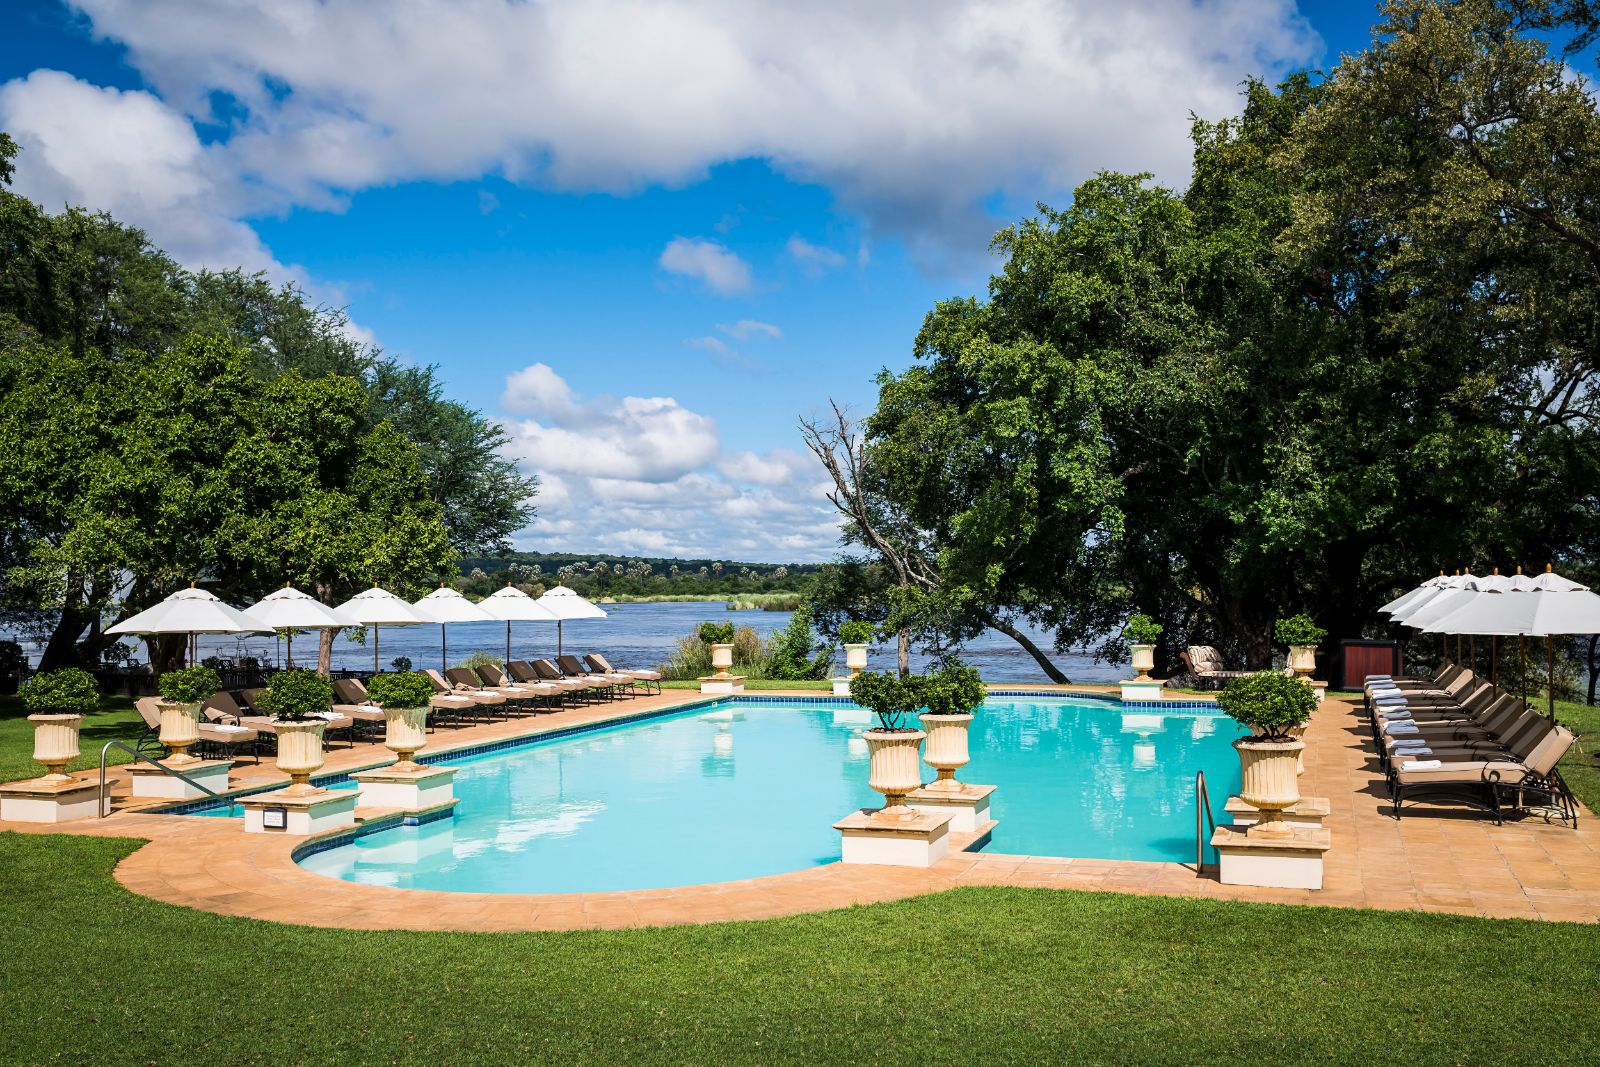 Swimming pool at The Royal Livingstone at Victoria Falls in Zambia